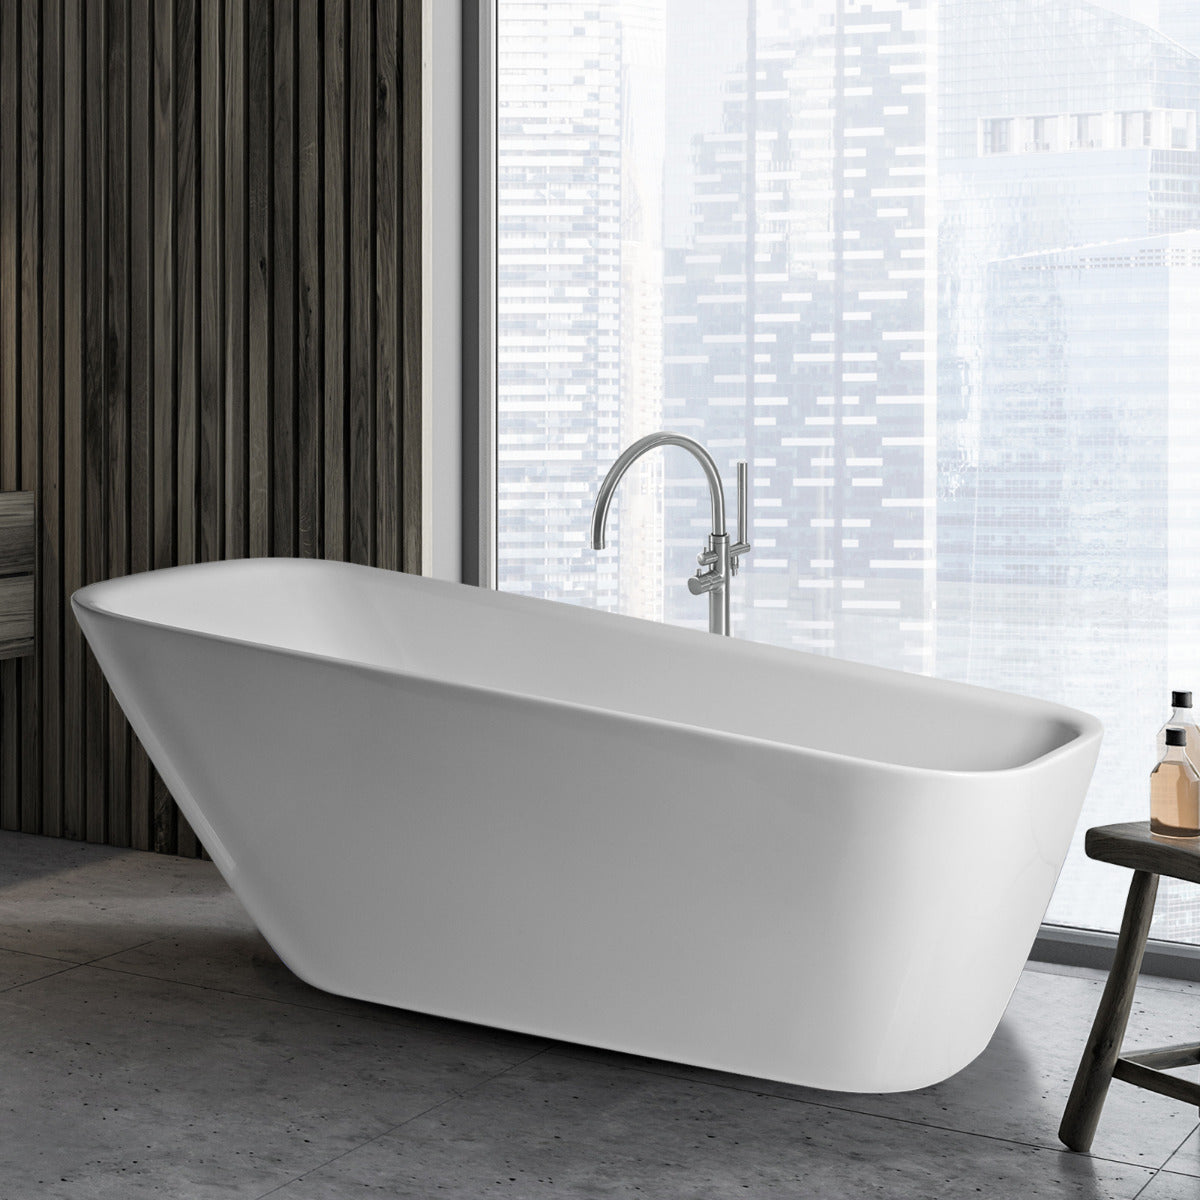 JassferryJASSFERRY Modern Design Rectangular Freestanding Bathtub Soaking BathsBathtubs